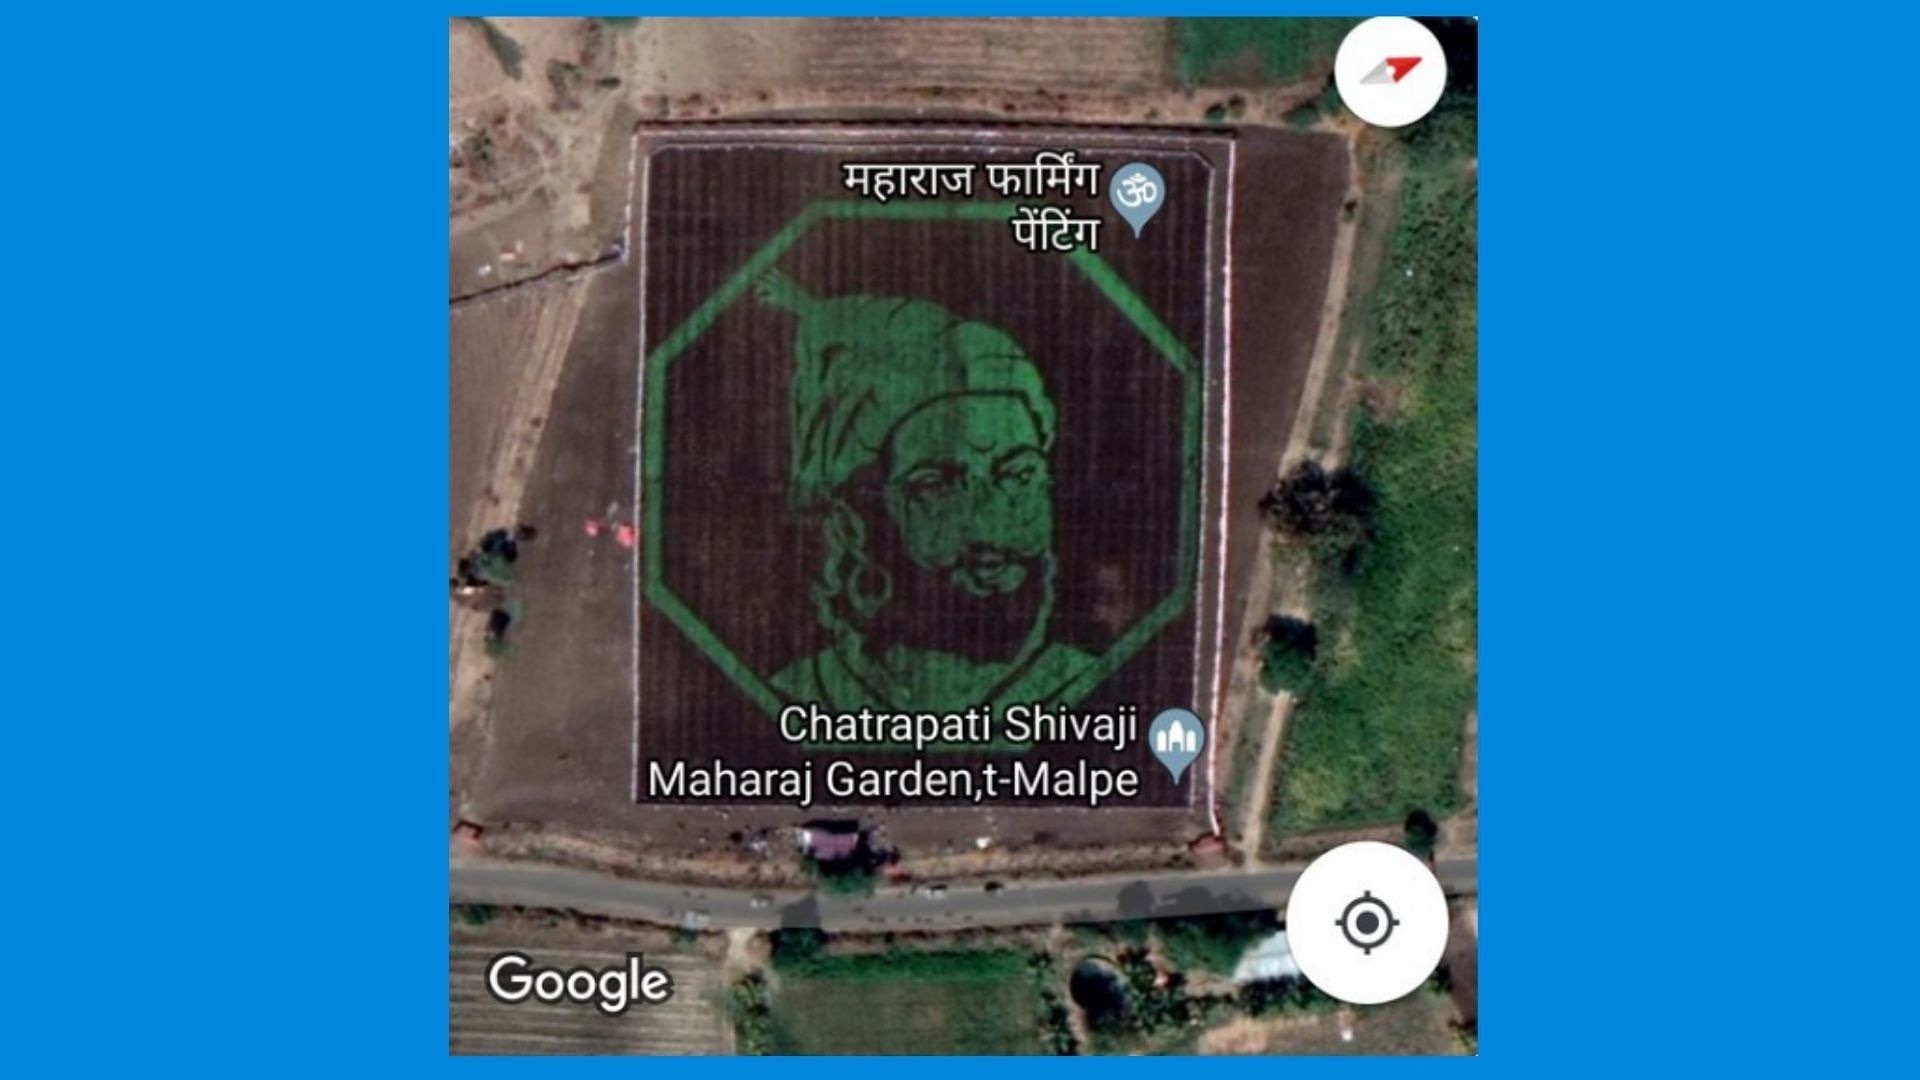 Artwork of Chhatrapati Shivaji, as seen on Google Maps.